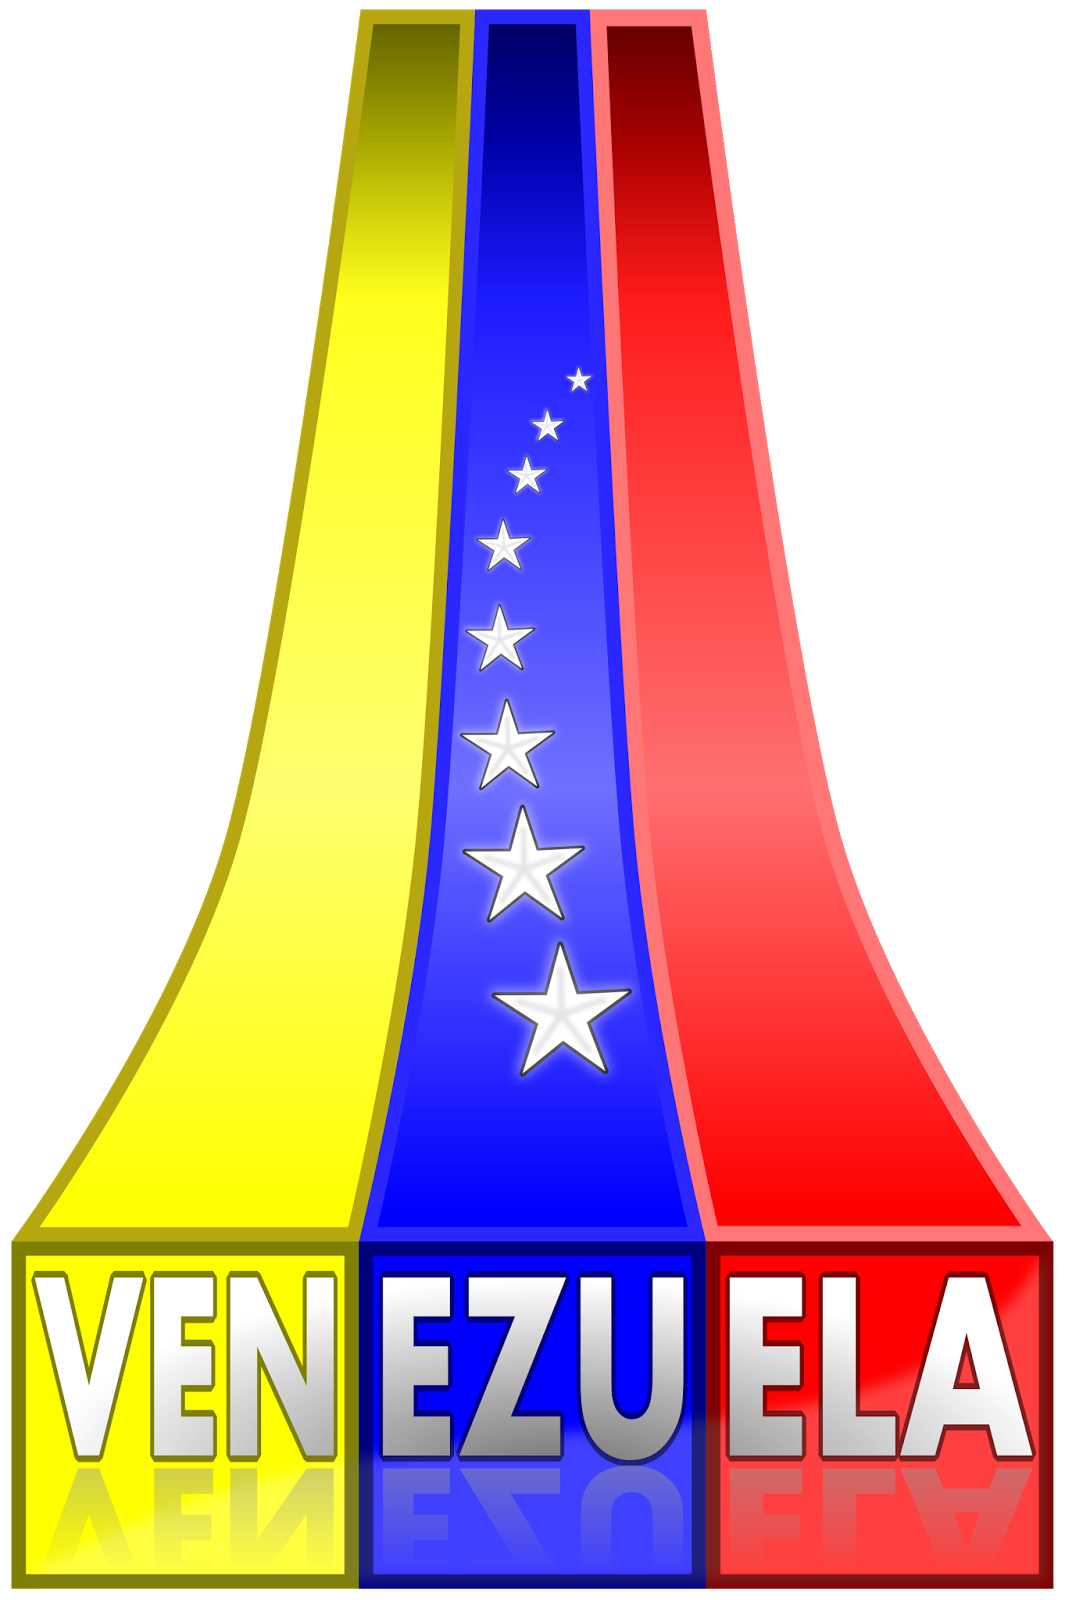 simbolos patrios Venezuela: febrero 2014